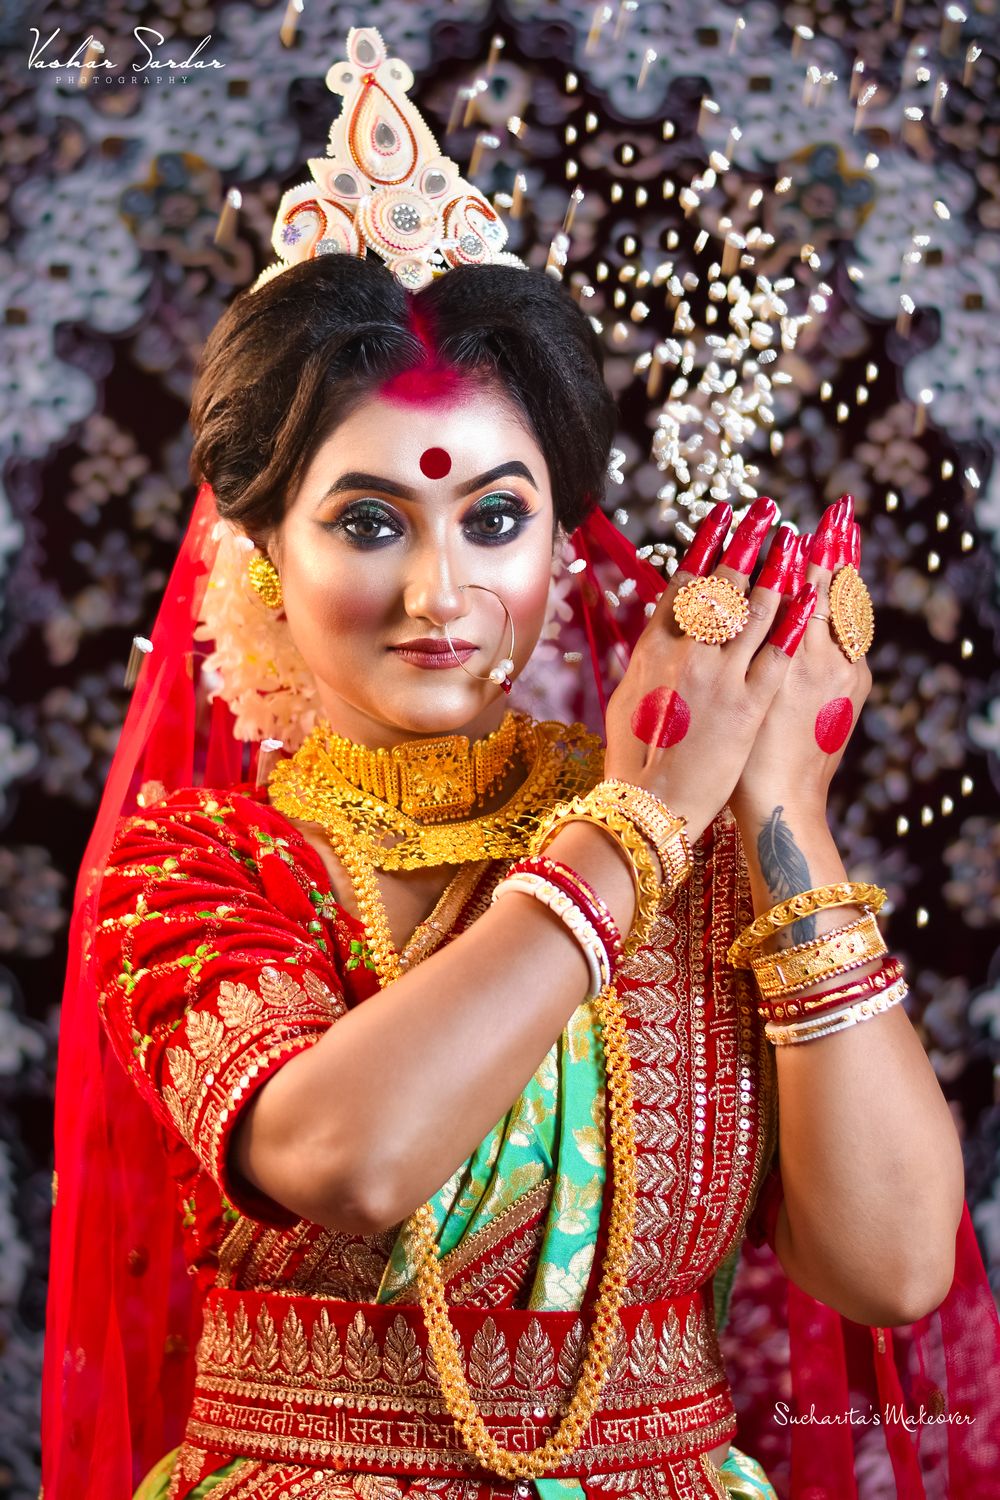 Sucharita's Professional Bridal Makeup Artist